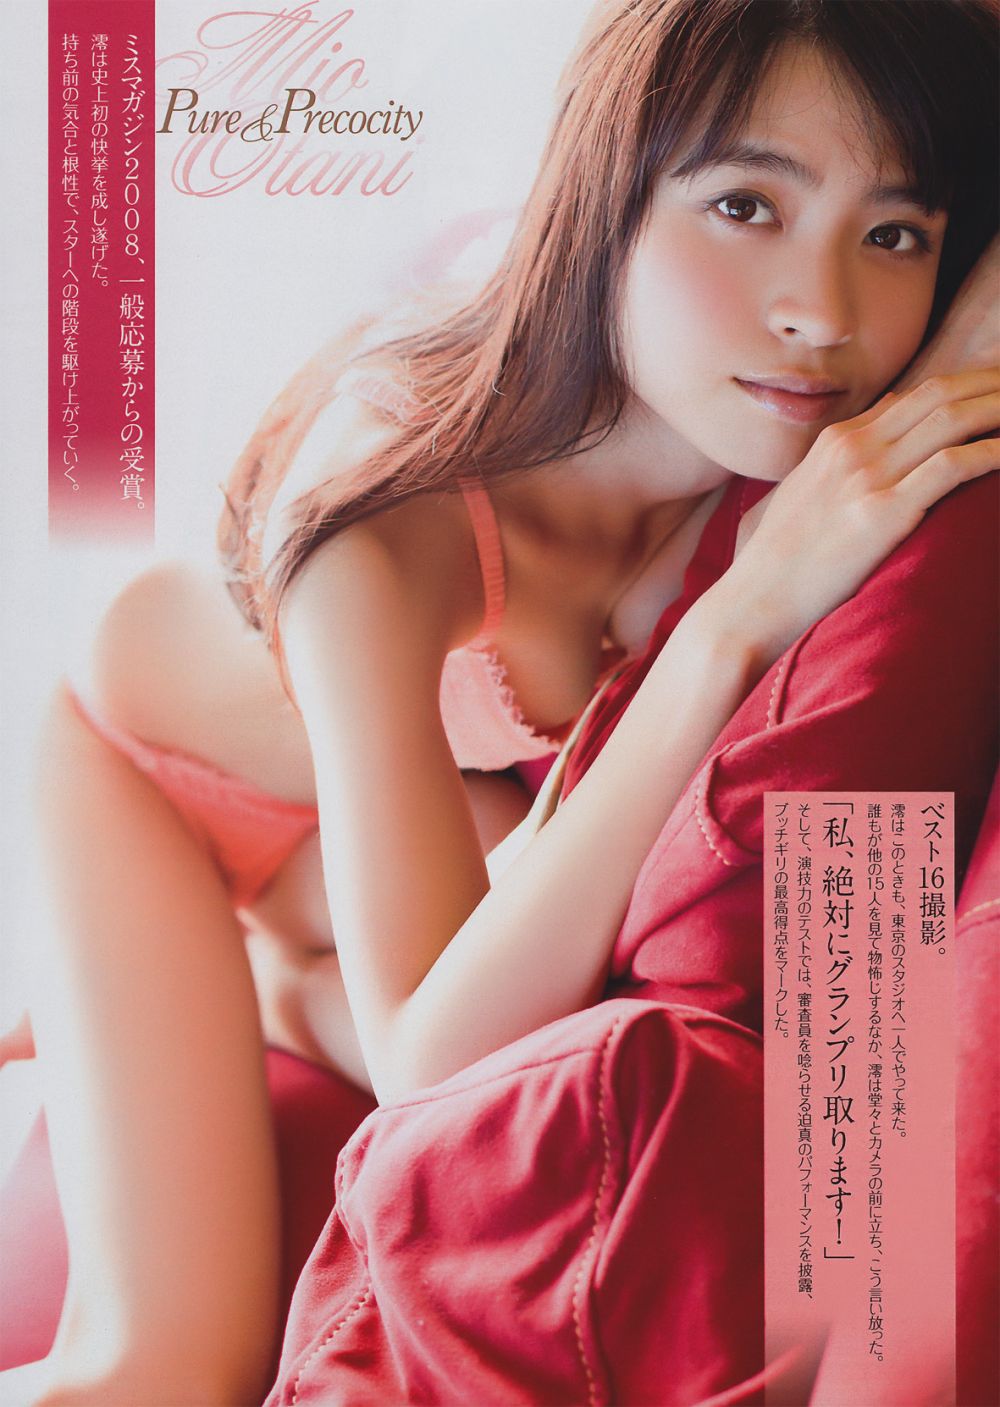 Mio Ohtani Sexy and Hottest Photos , Latest Pics